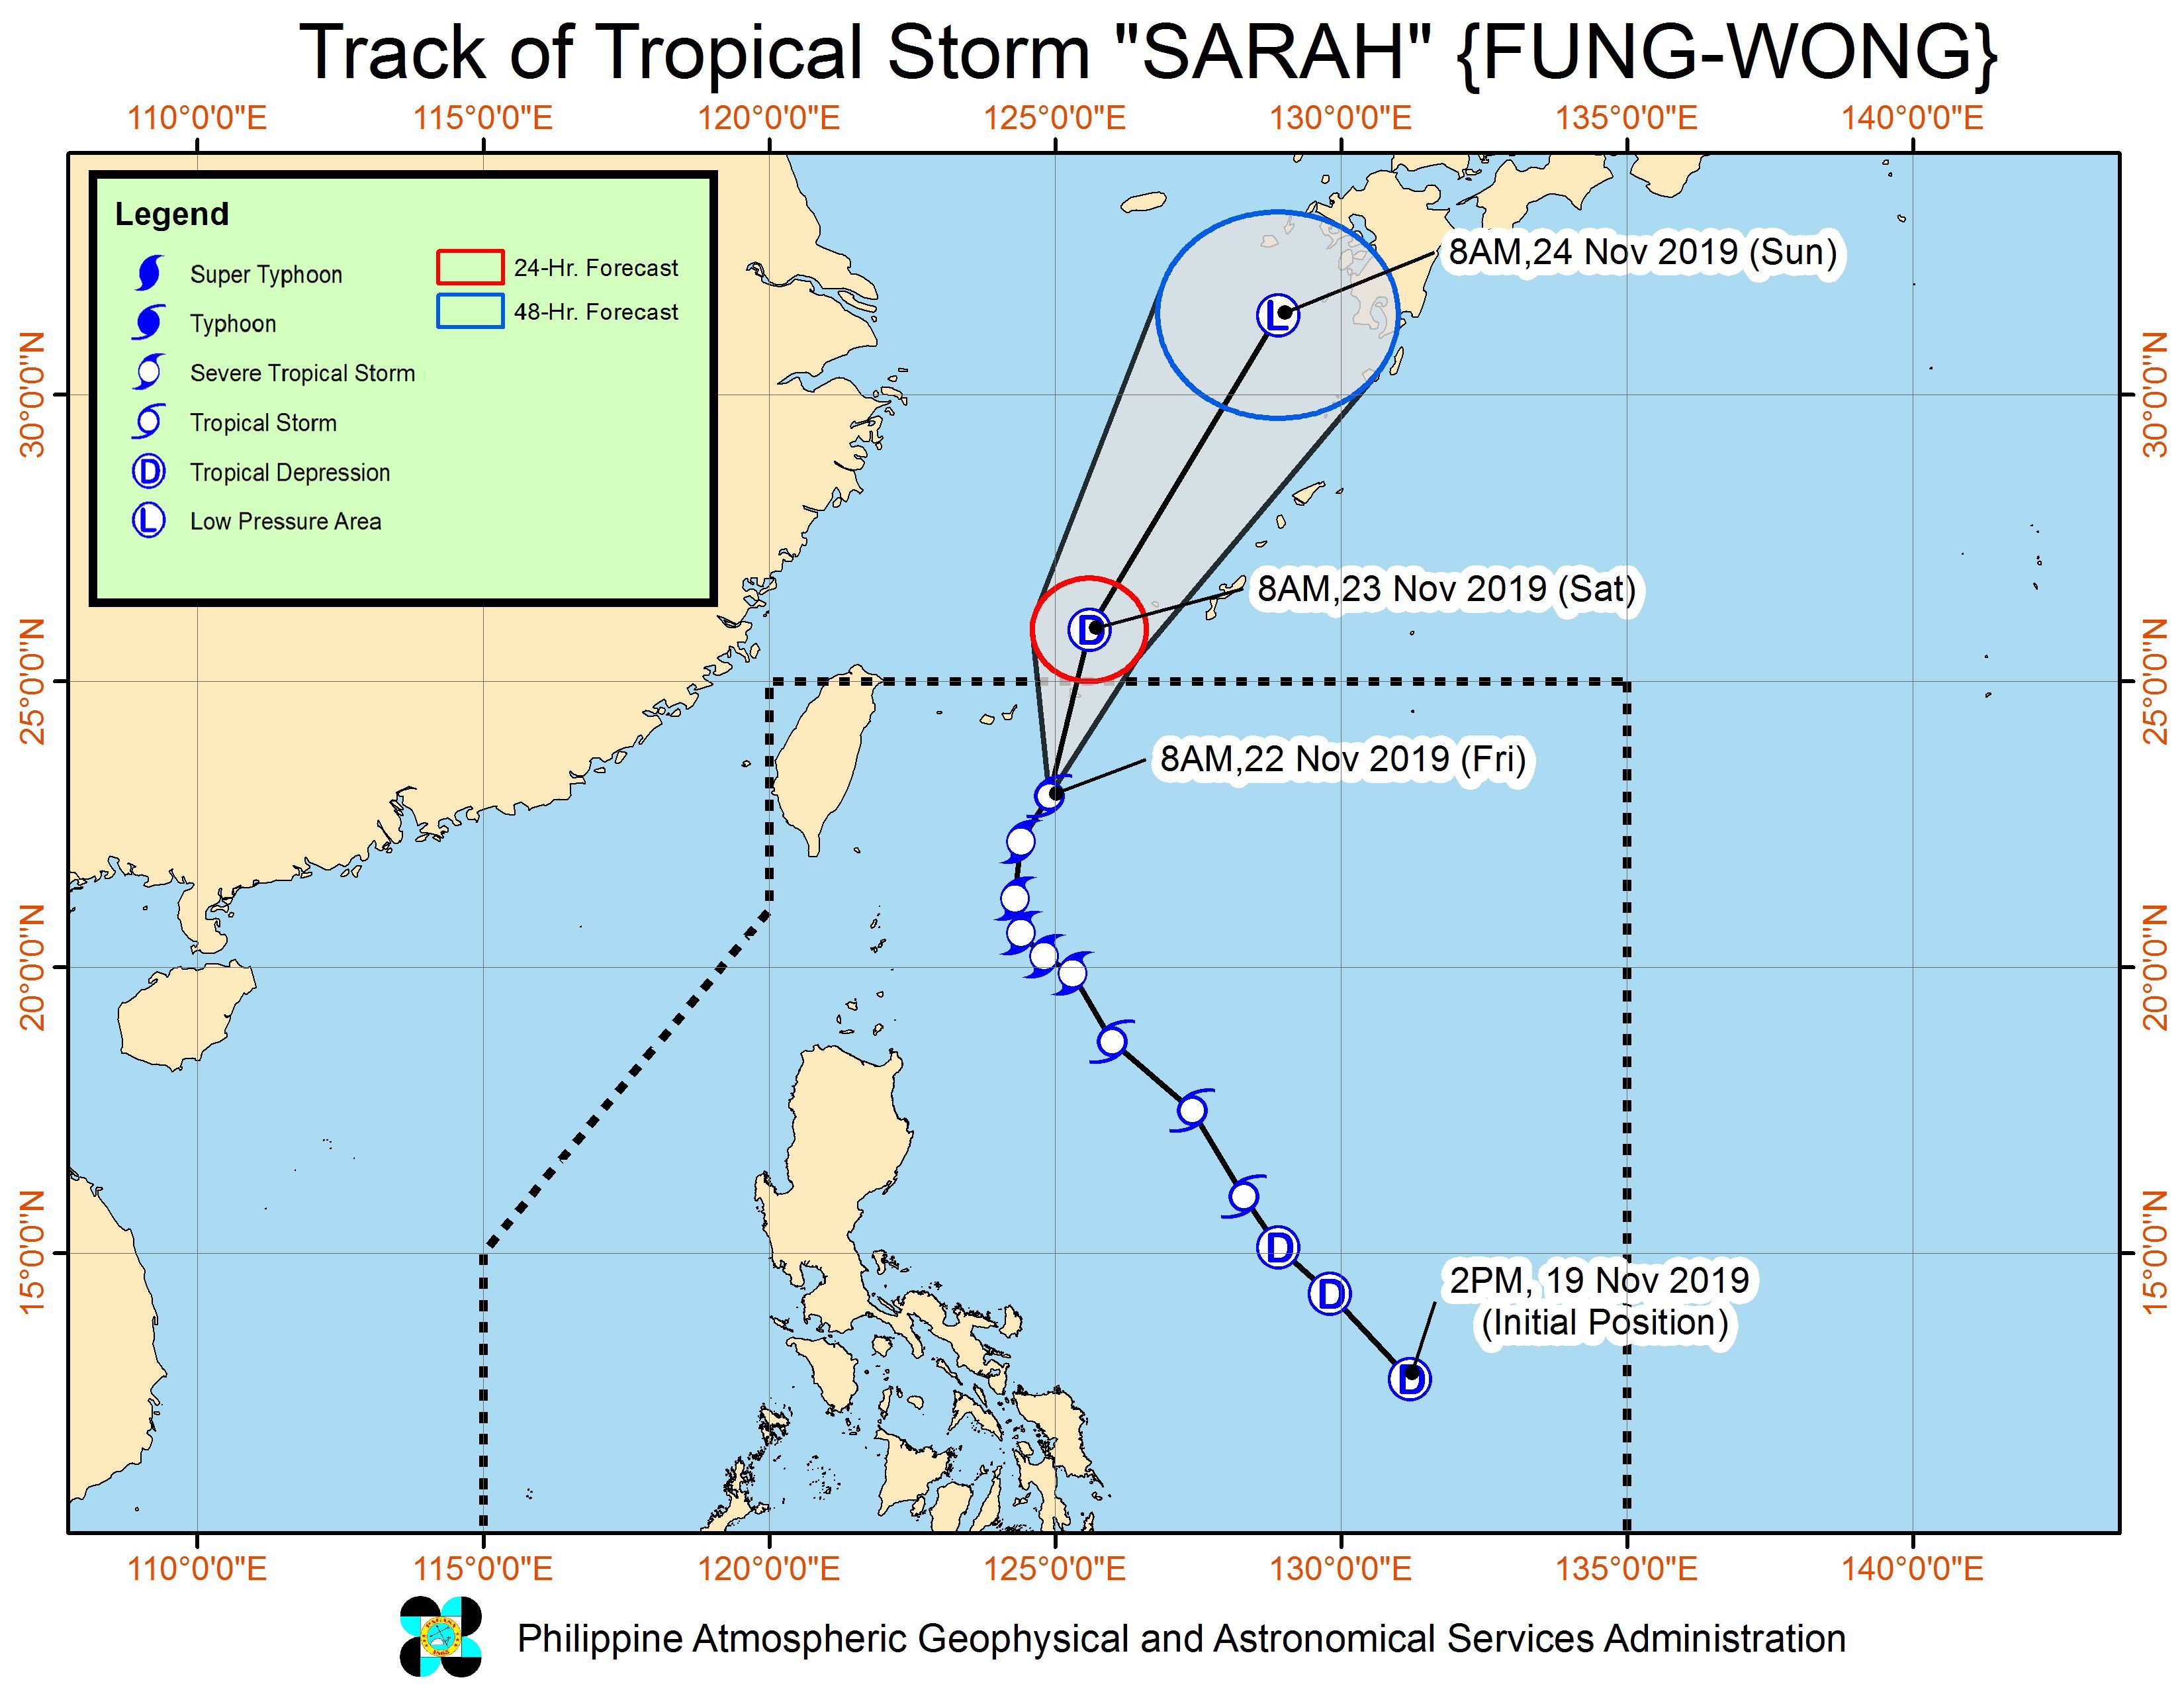 Forecast track of Tropical Storm Sarah (Fung-wong) as of November 22, 2019, 11 am. Image from PAGASA 